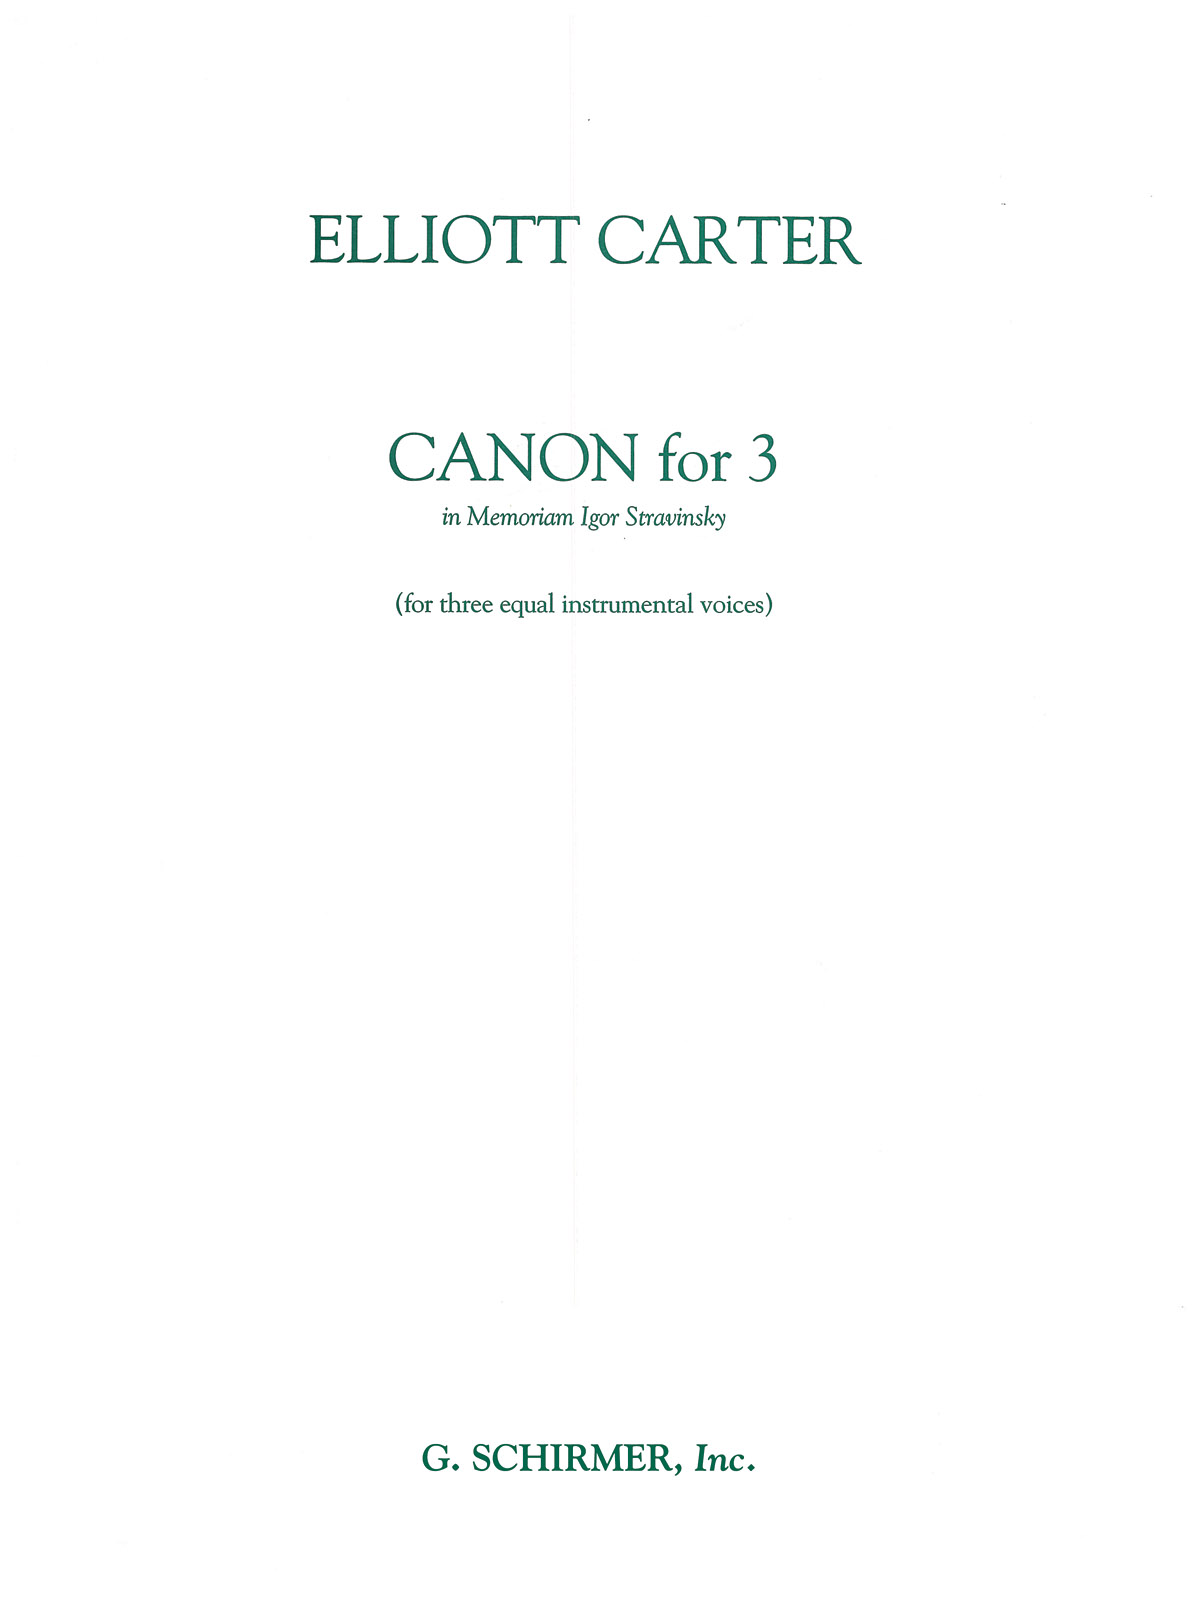 Elliott Carter: Canon For Three Equal Instruments 'In Memoriam Igor Stravinsky'